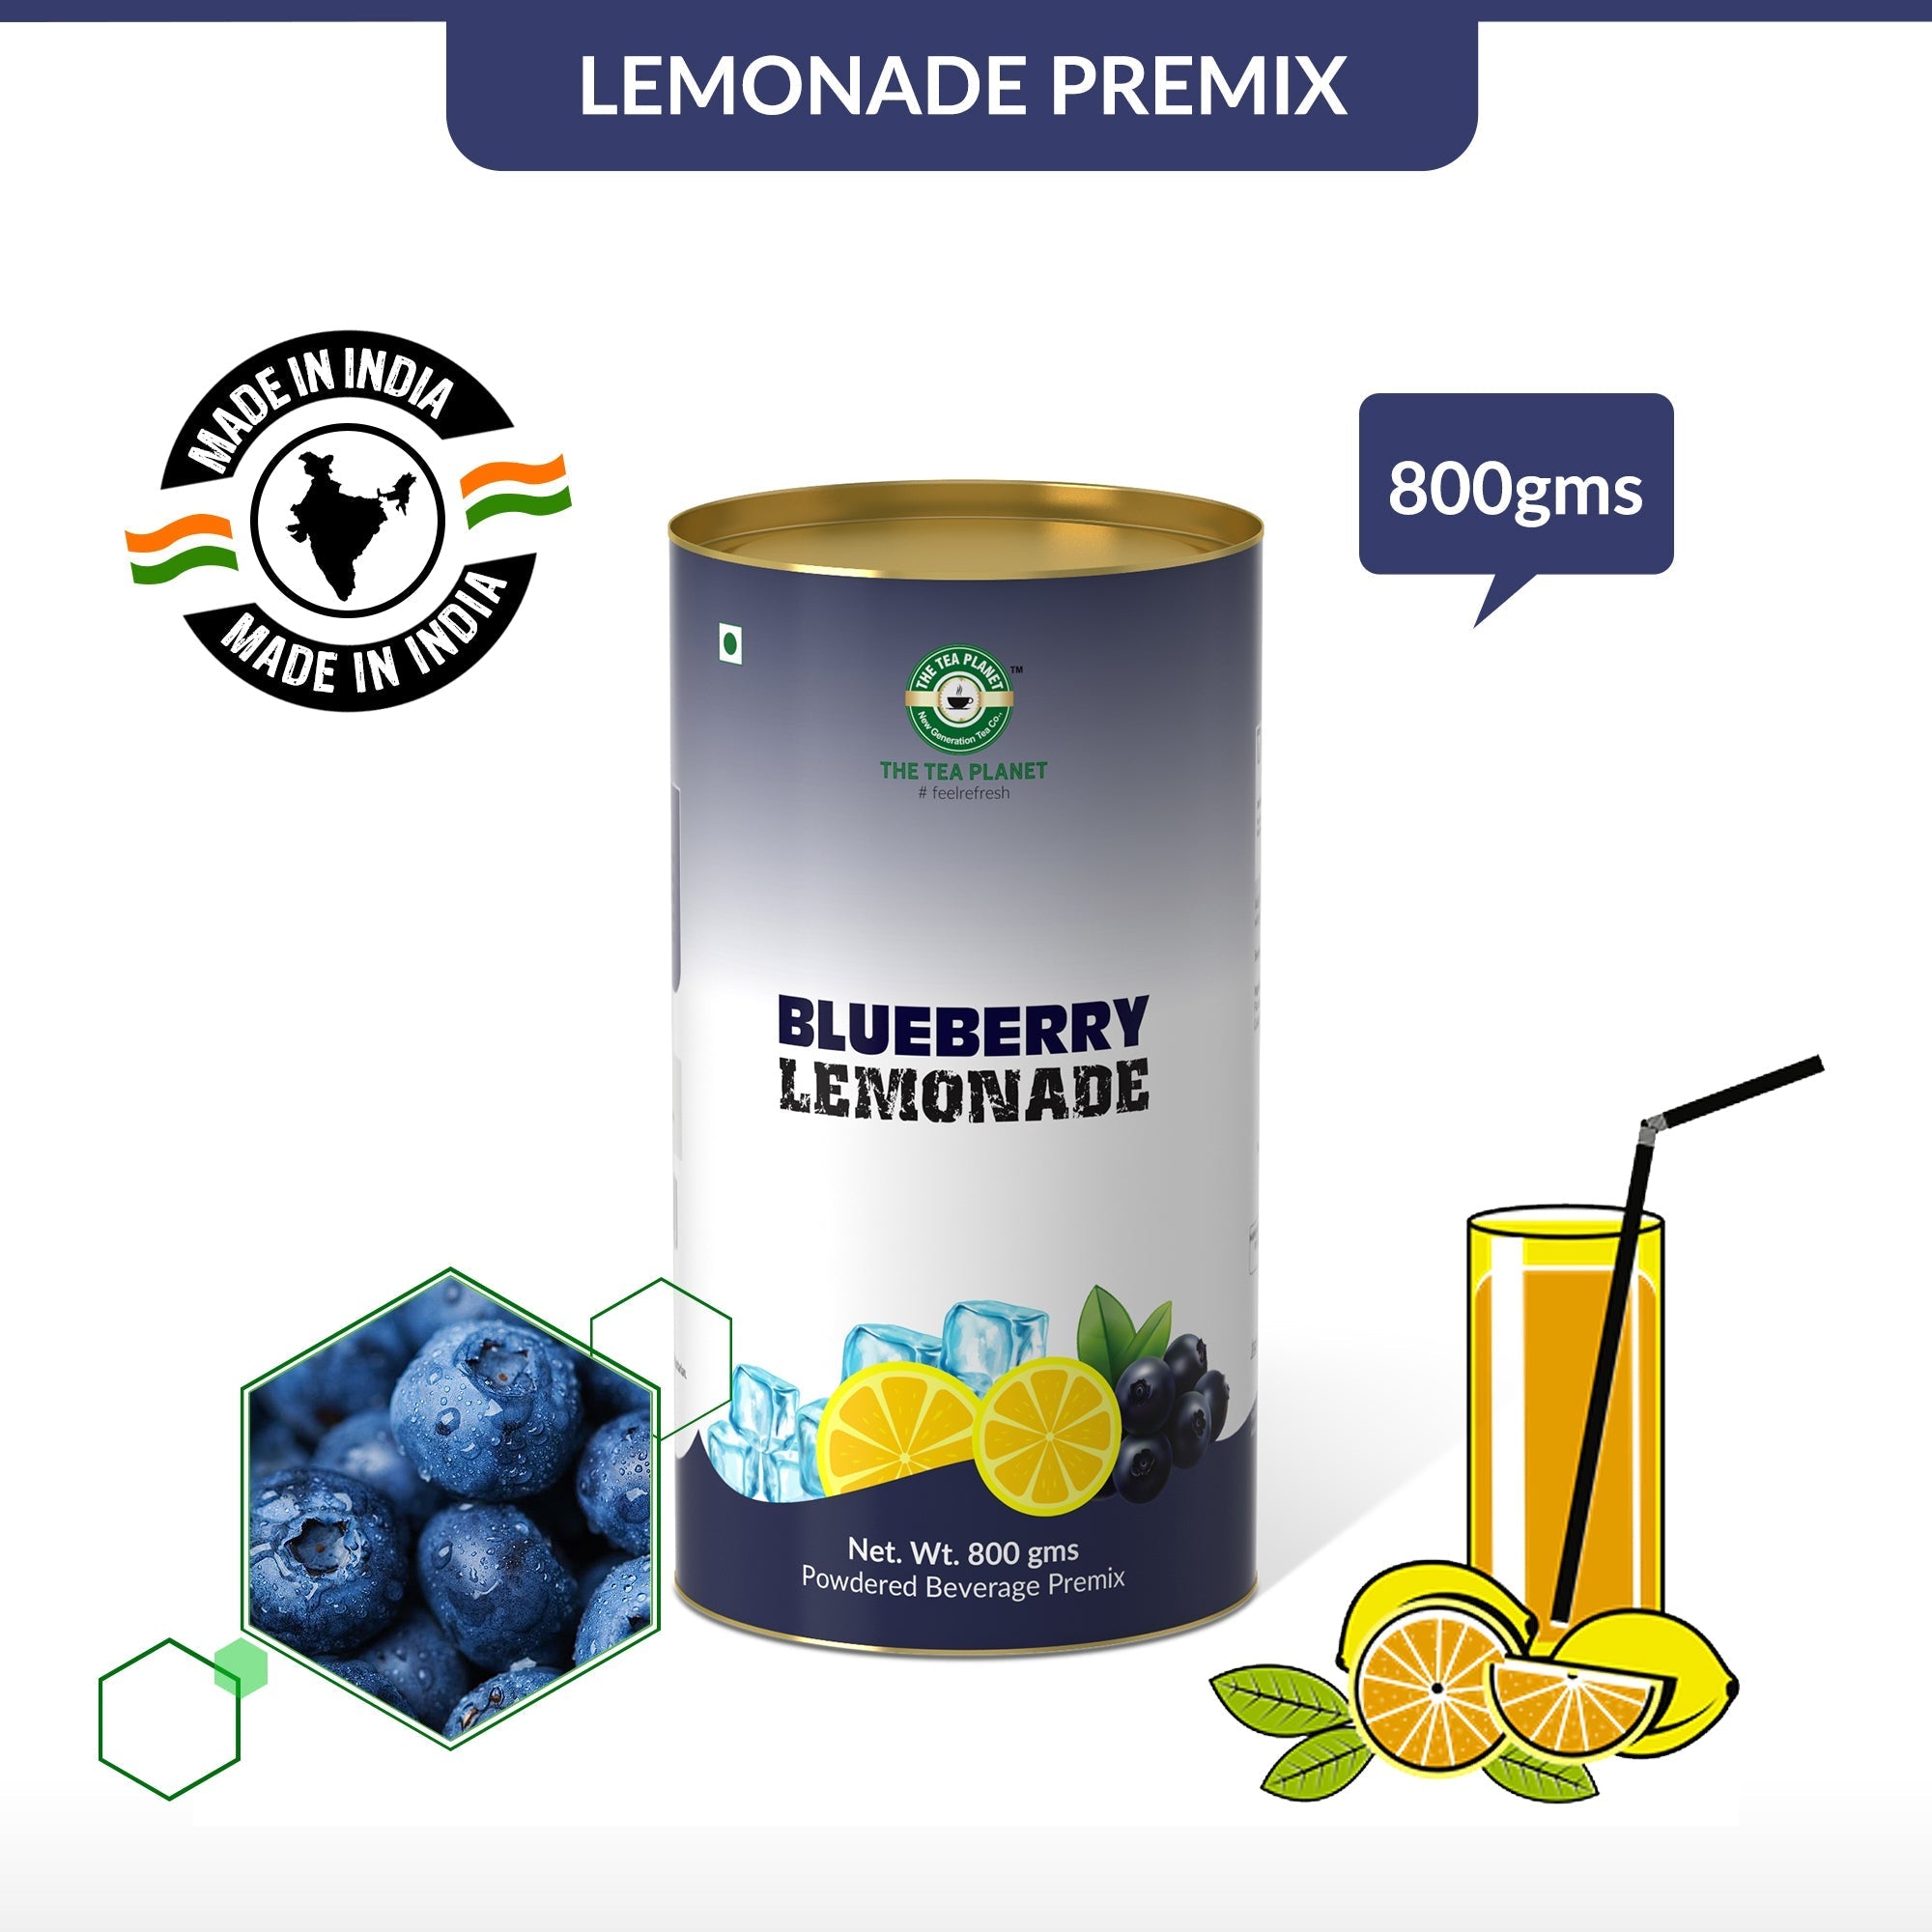 Blueberry Lemonade Premix - 800 gms